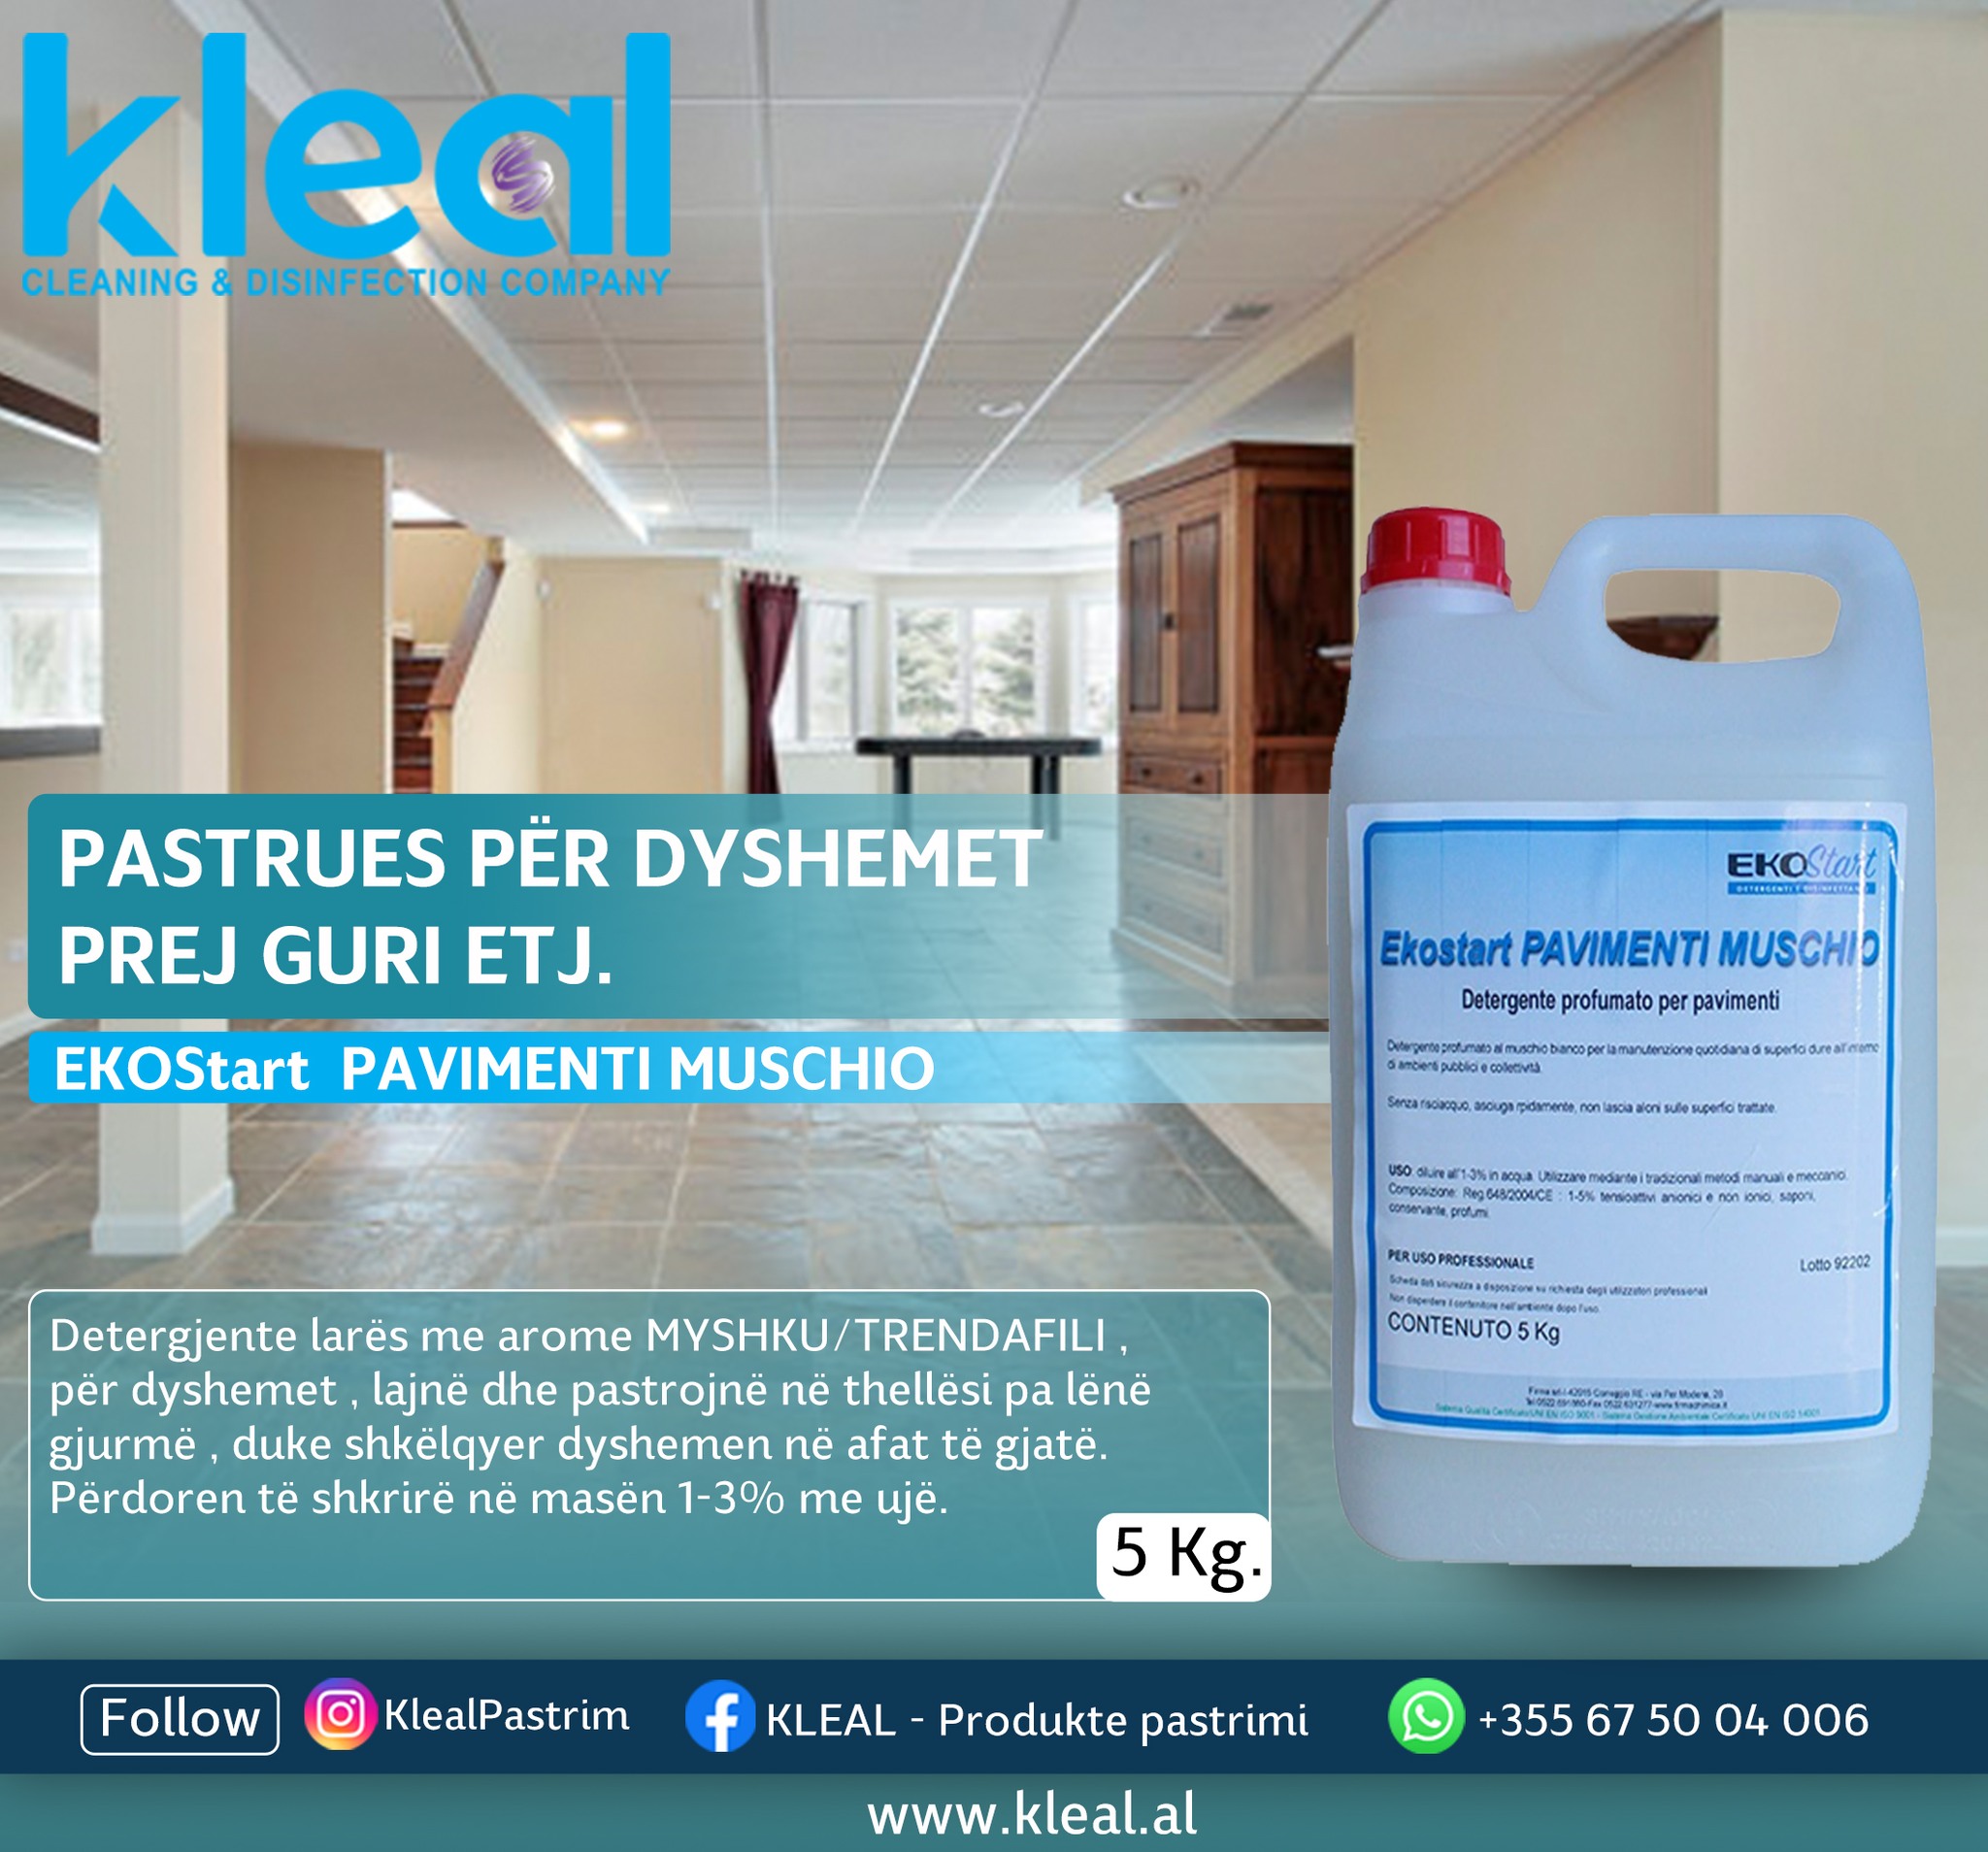 detergjente-produkte-pastrimi-1